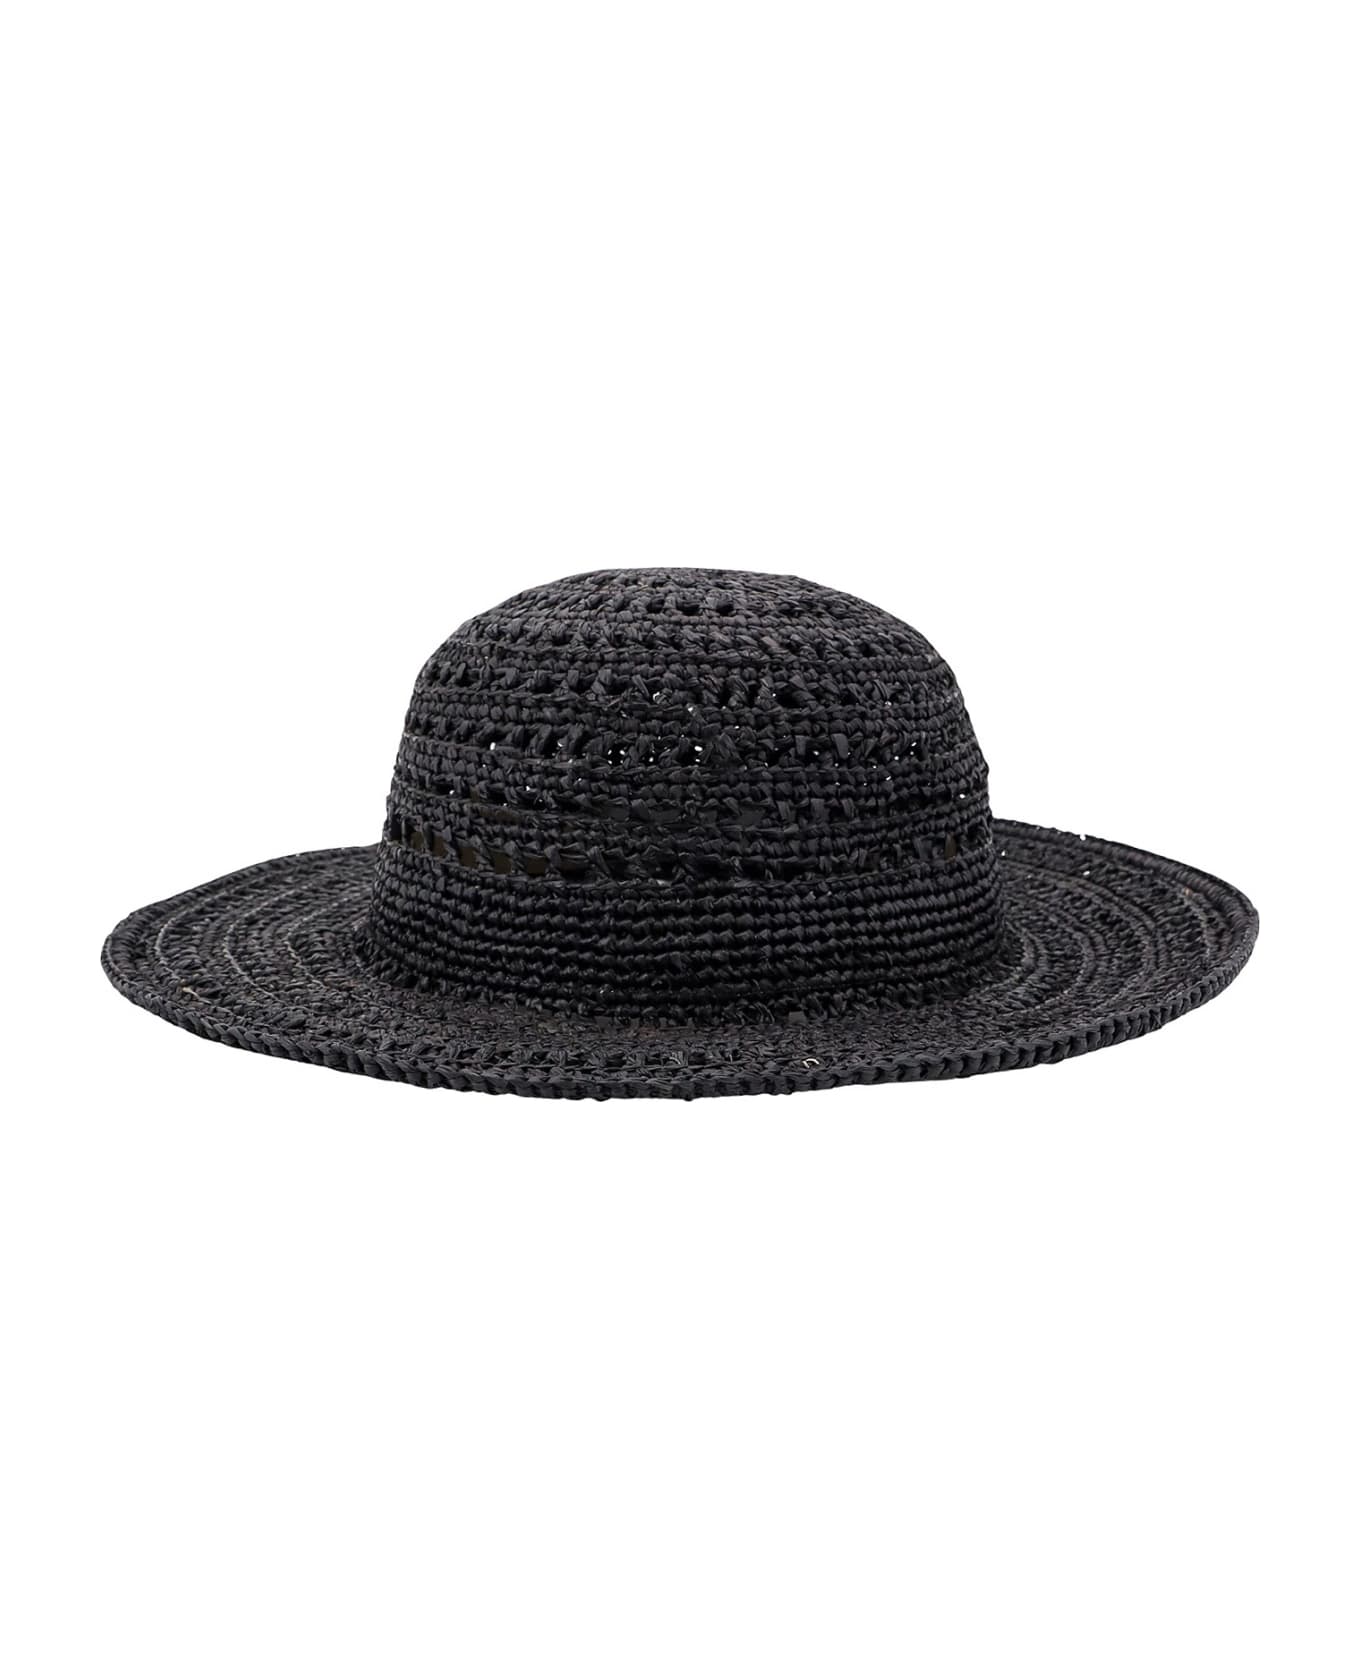 Ibeliv Lalao Hat - Black 帽子